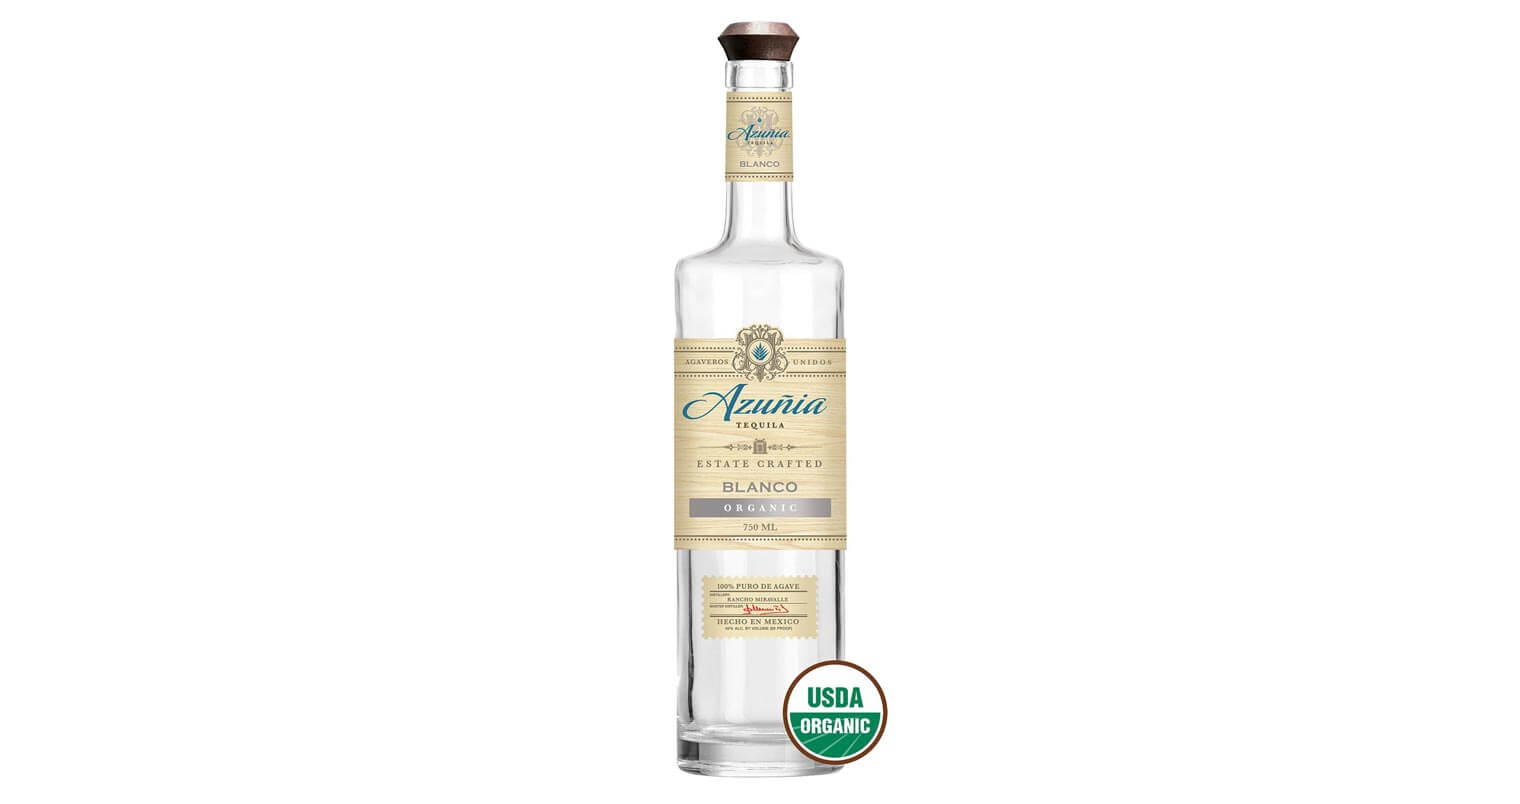 Azuñia Tequila, bottle on white, featured image